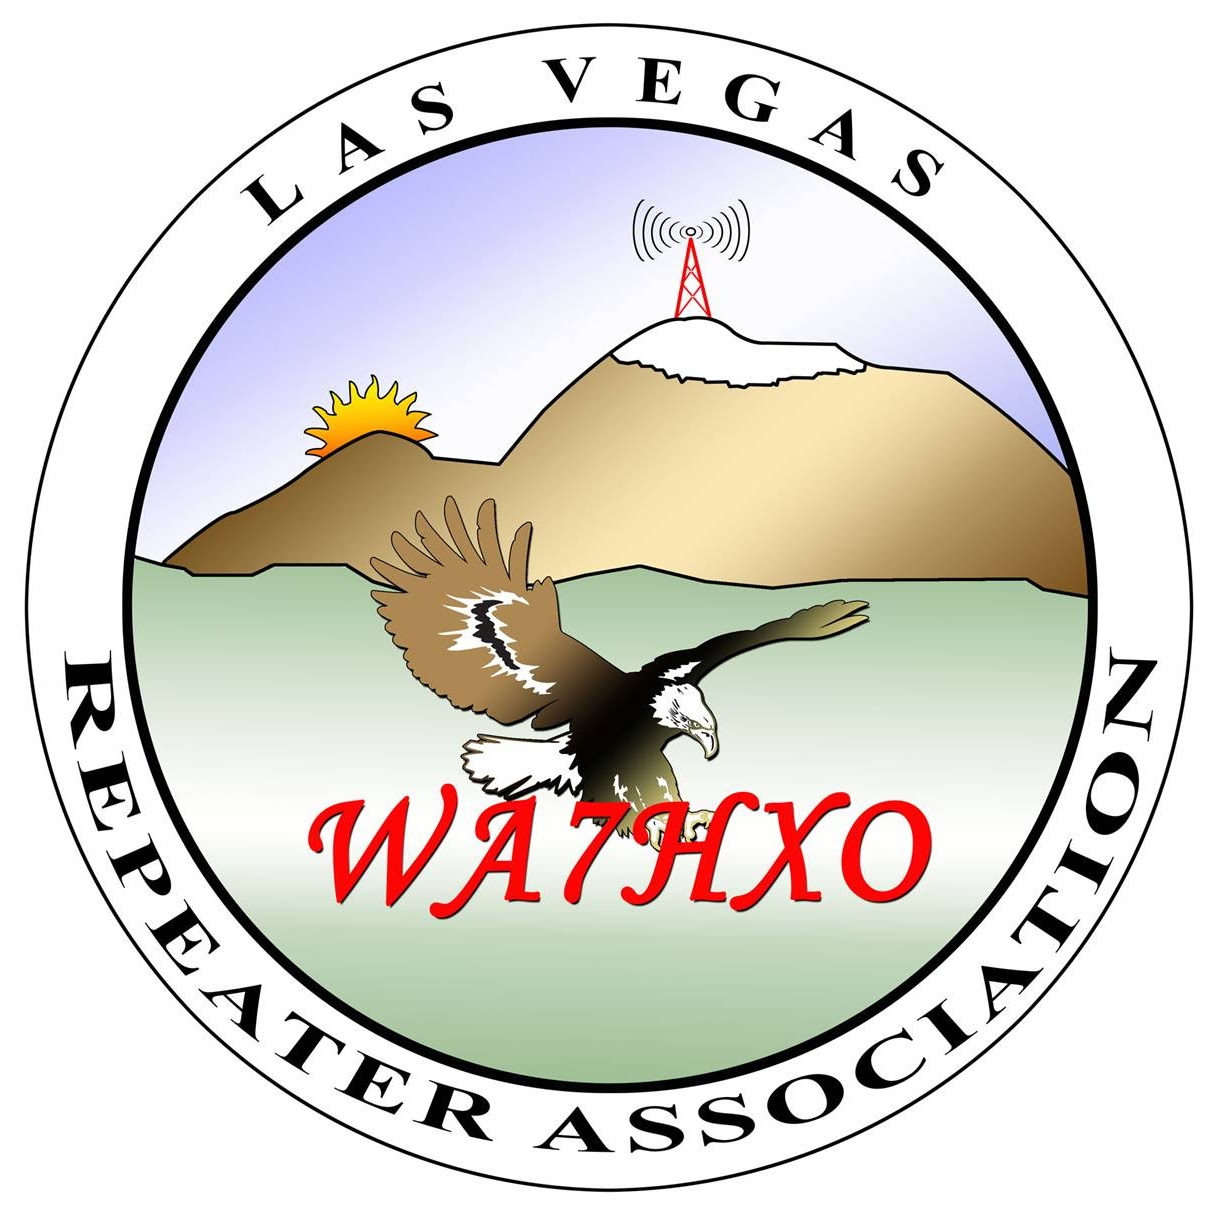 Las Vegas Repeater Association